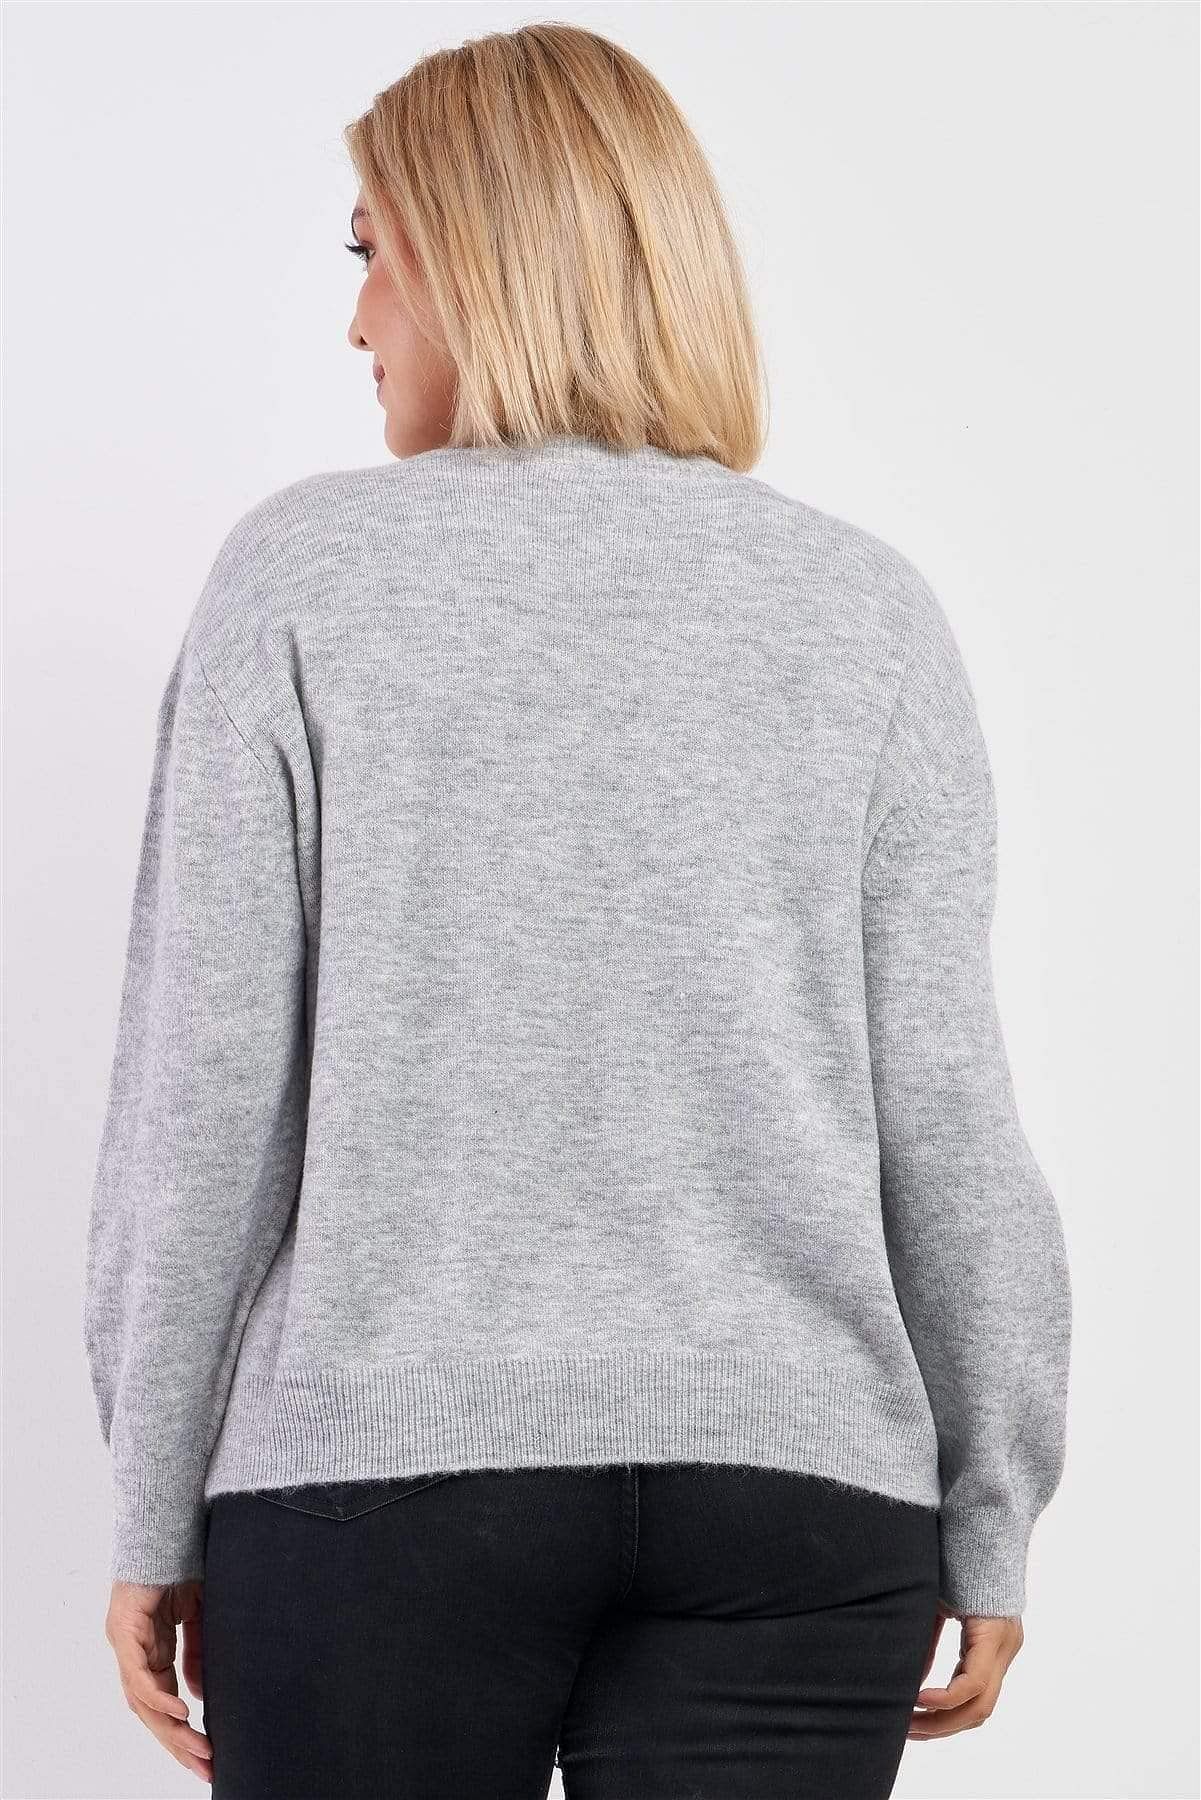 Heather Gray Plus Size Long Sleeve Sweatshirt - Shopping Therapy, LLC Shirts & Tops